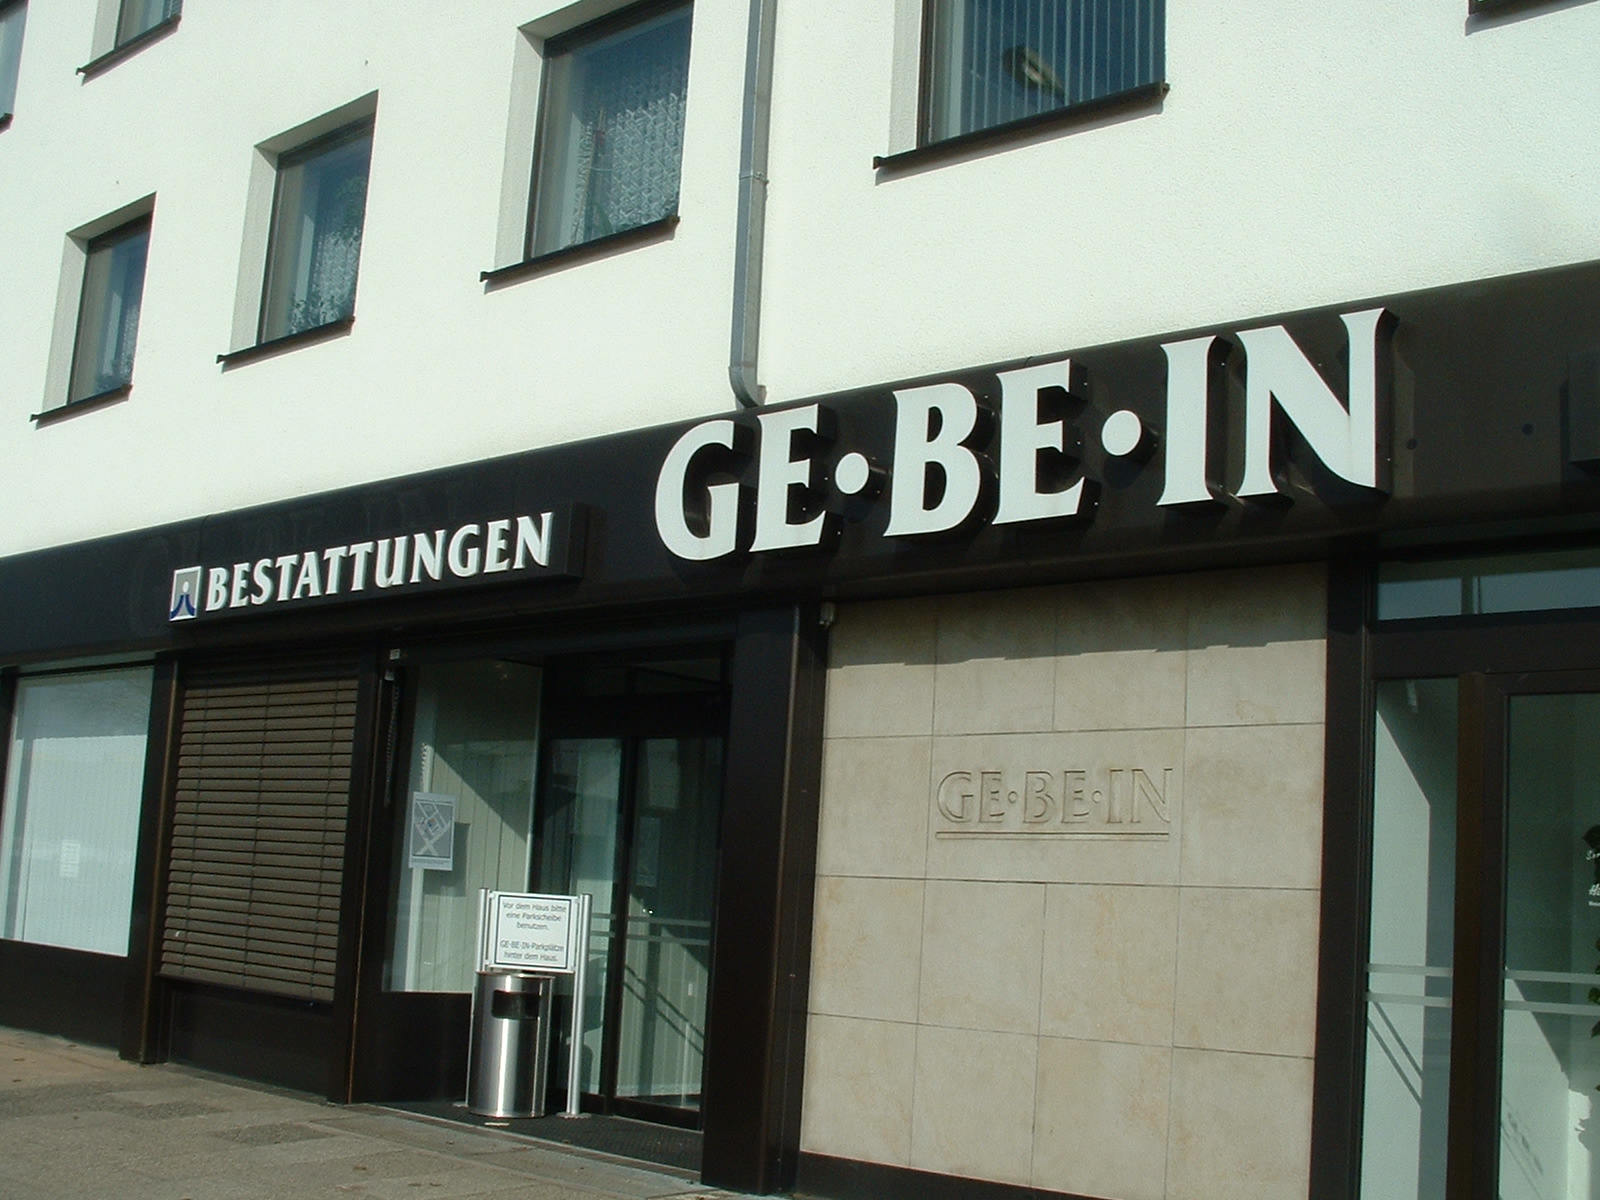 GE*BE*IN Bremen